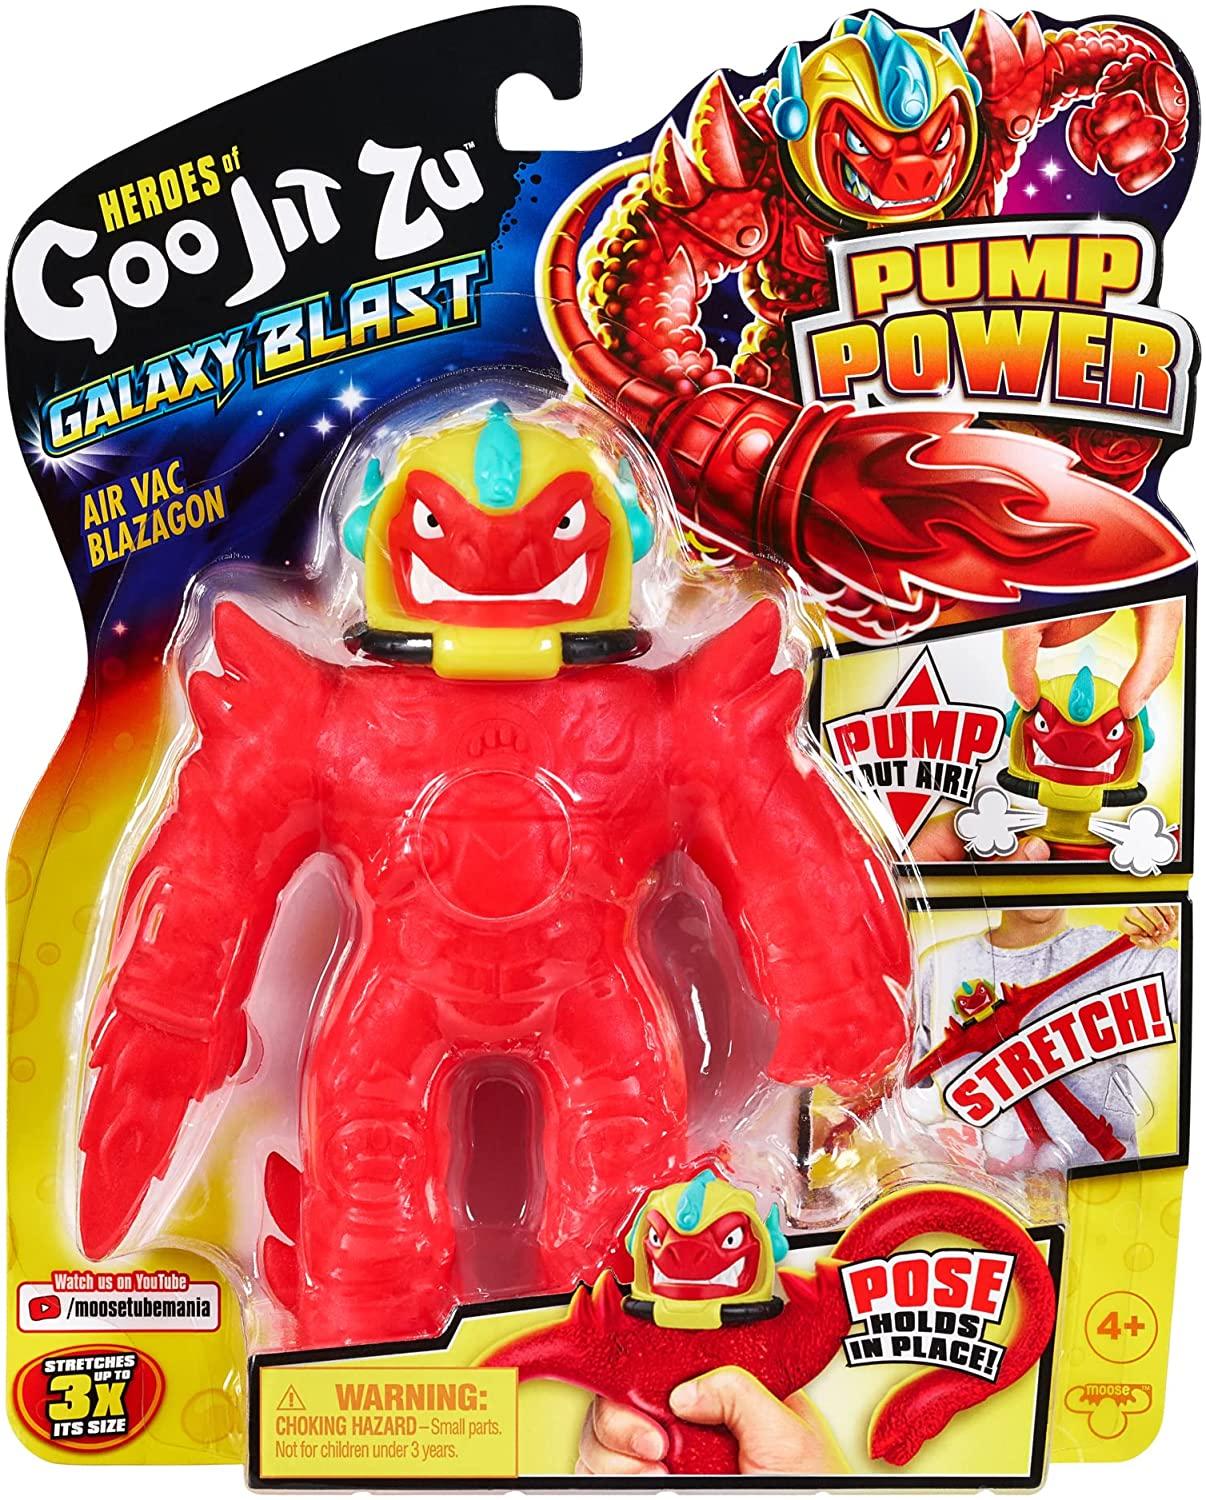 Heroes of Goo Jit Zu Galaxy Blast Pump Power - Air Vac Blazagon - Pump, Stretch, Pose and Release!